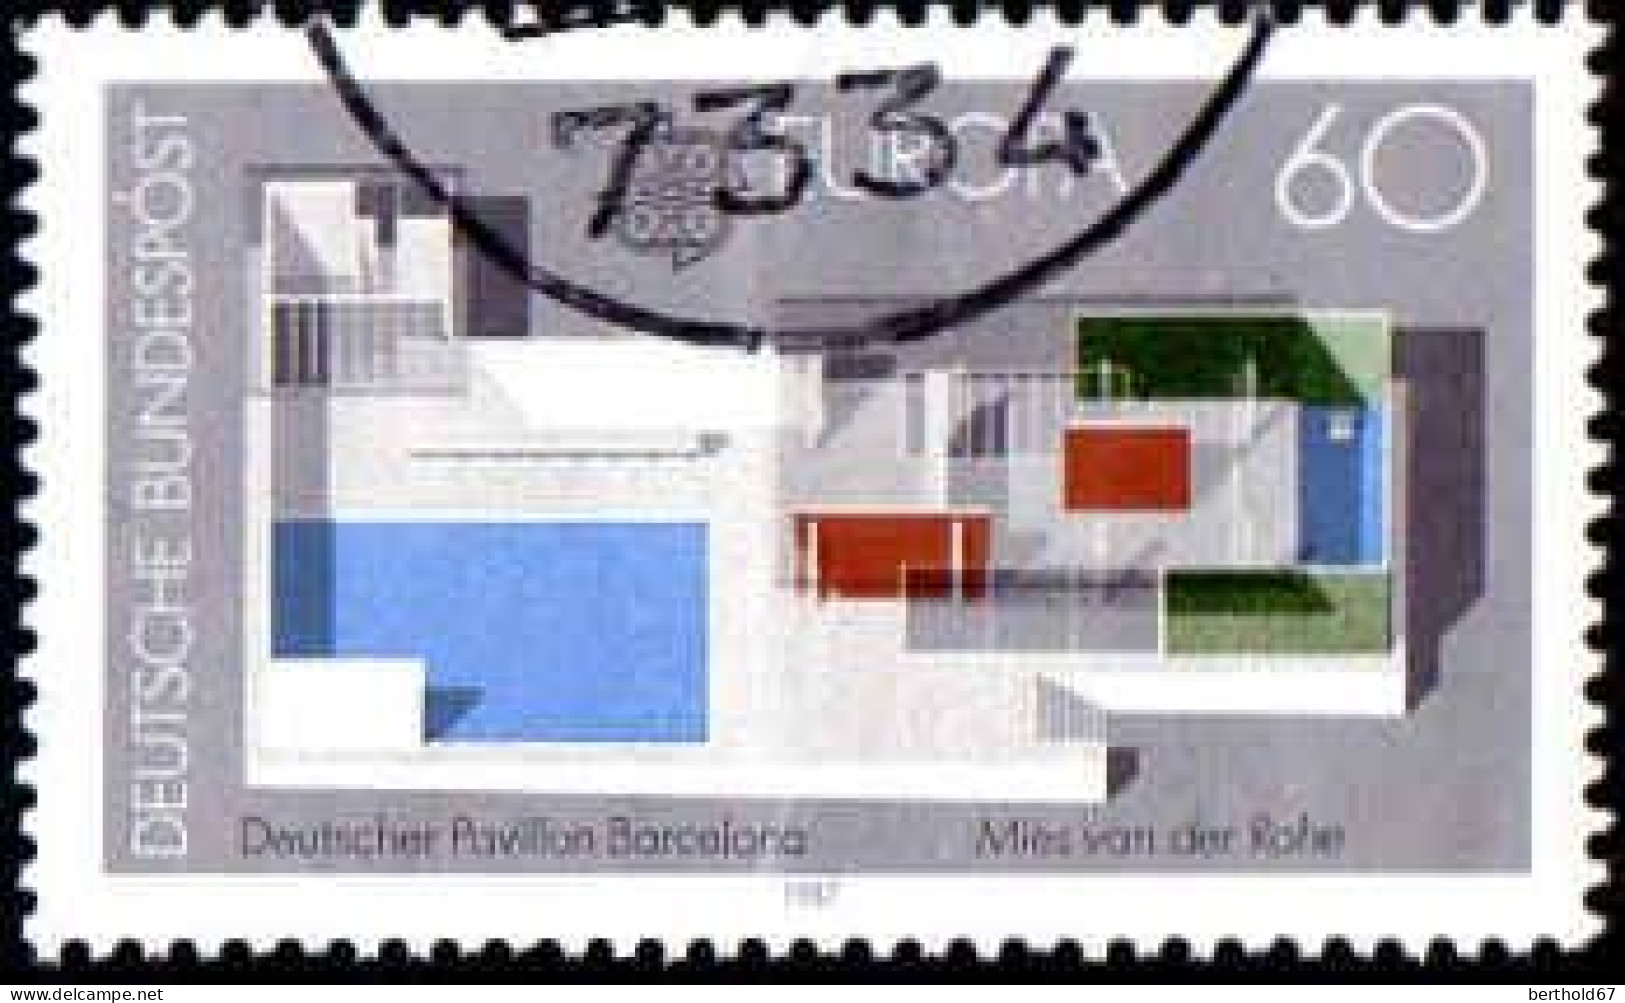 RFA Poste Obl Yv:1153/1154 Europa Cept Architecture Moderne (Beau Cachet Rond) (Thème) - 1987